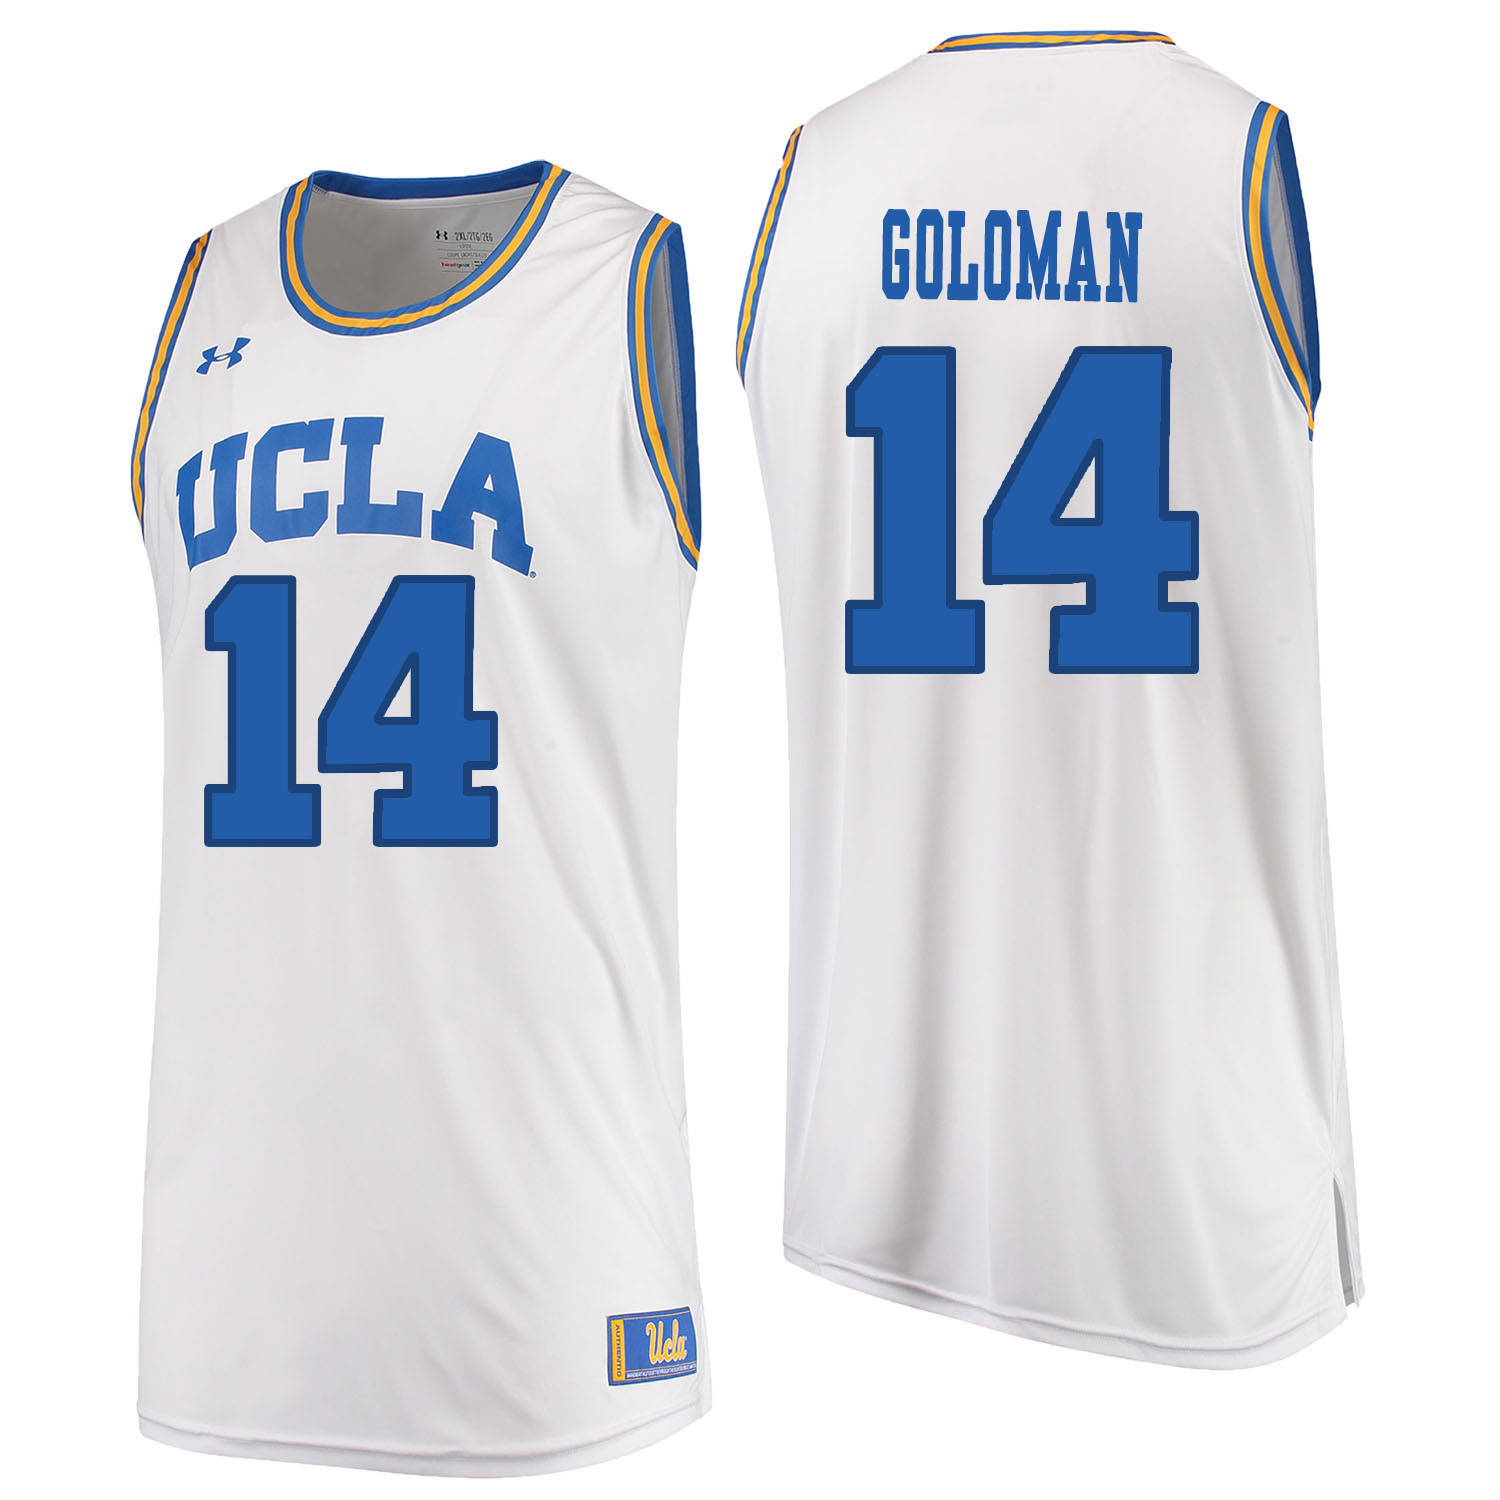 UCLA Bruins 14 Gyorgy Goloman White College Basketball Jersey